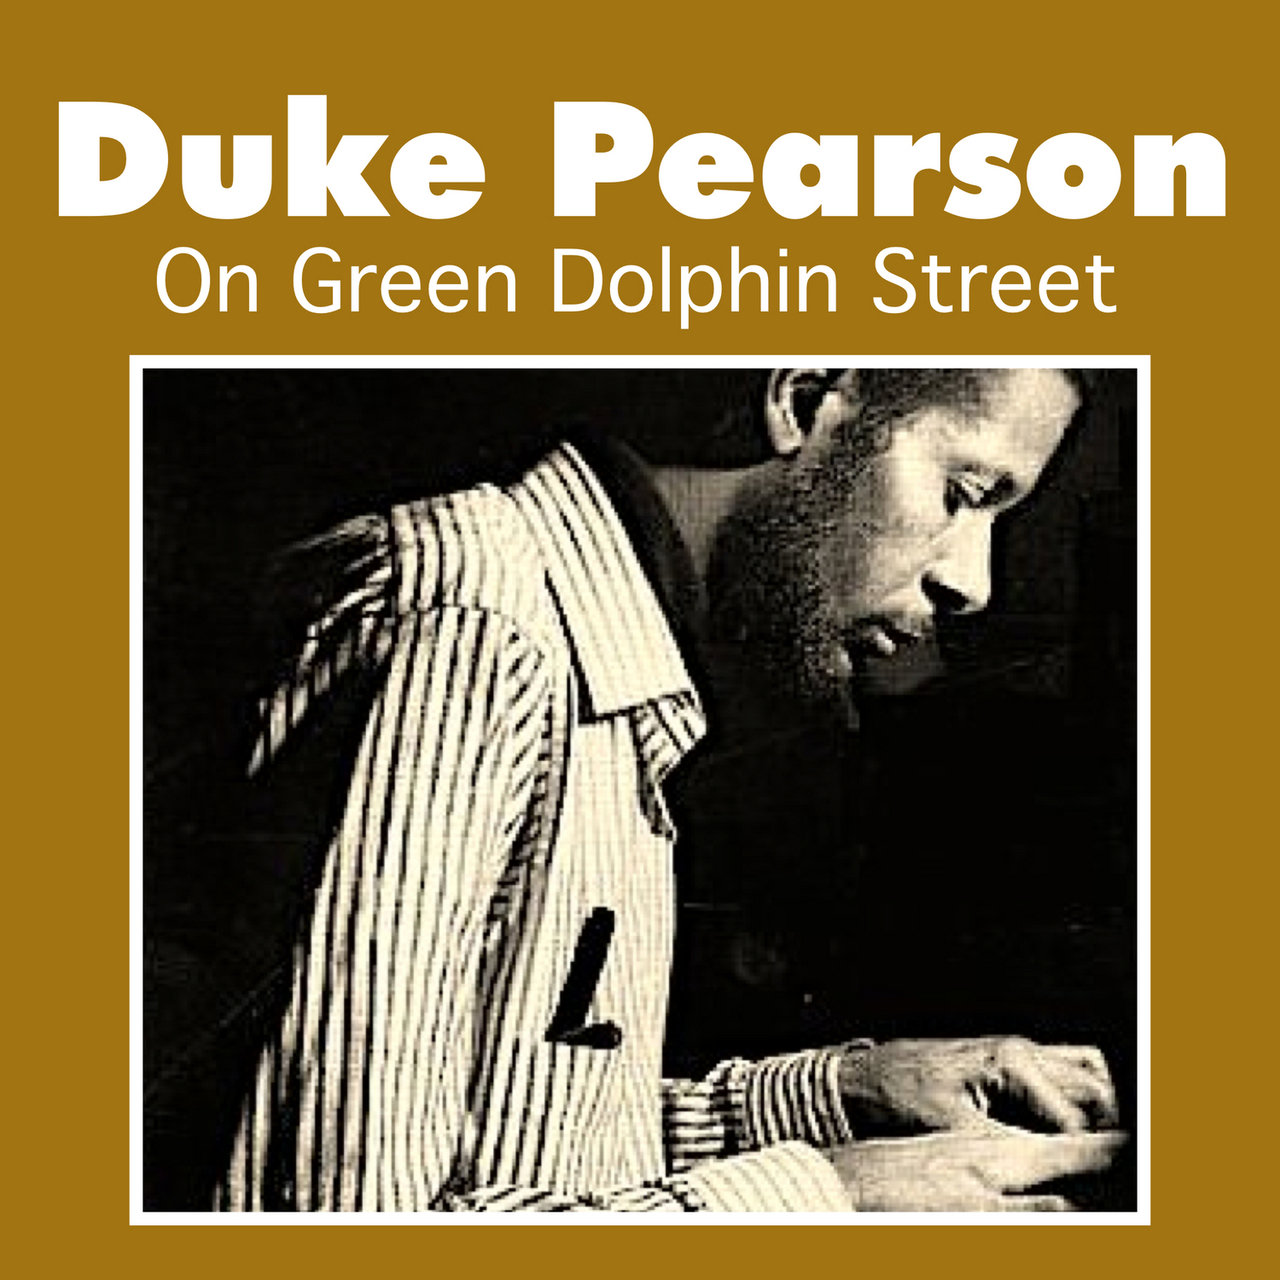 DUKE PEARSON - On Green Dolphin Street cover 